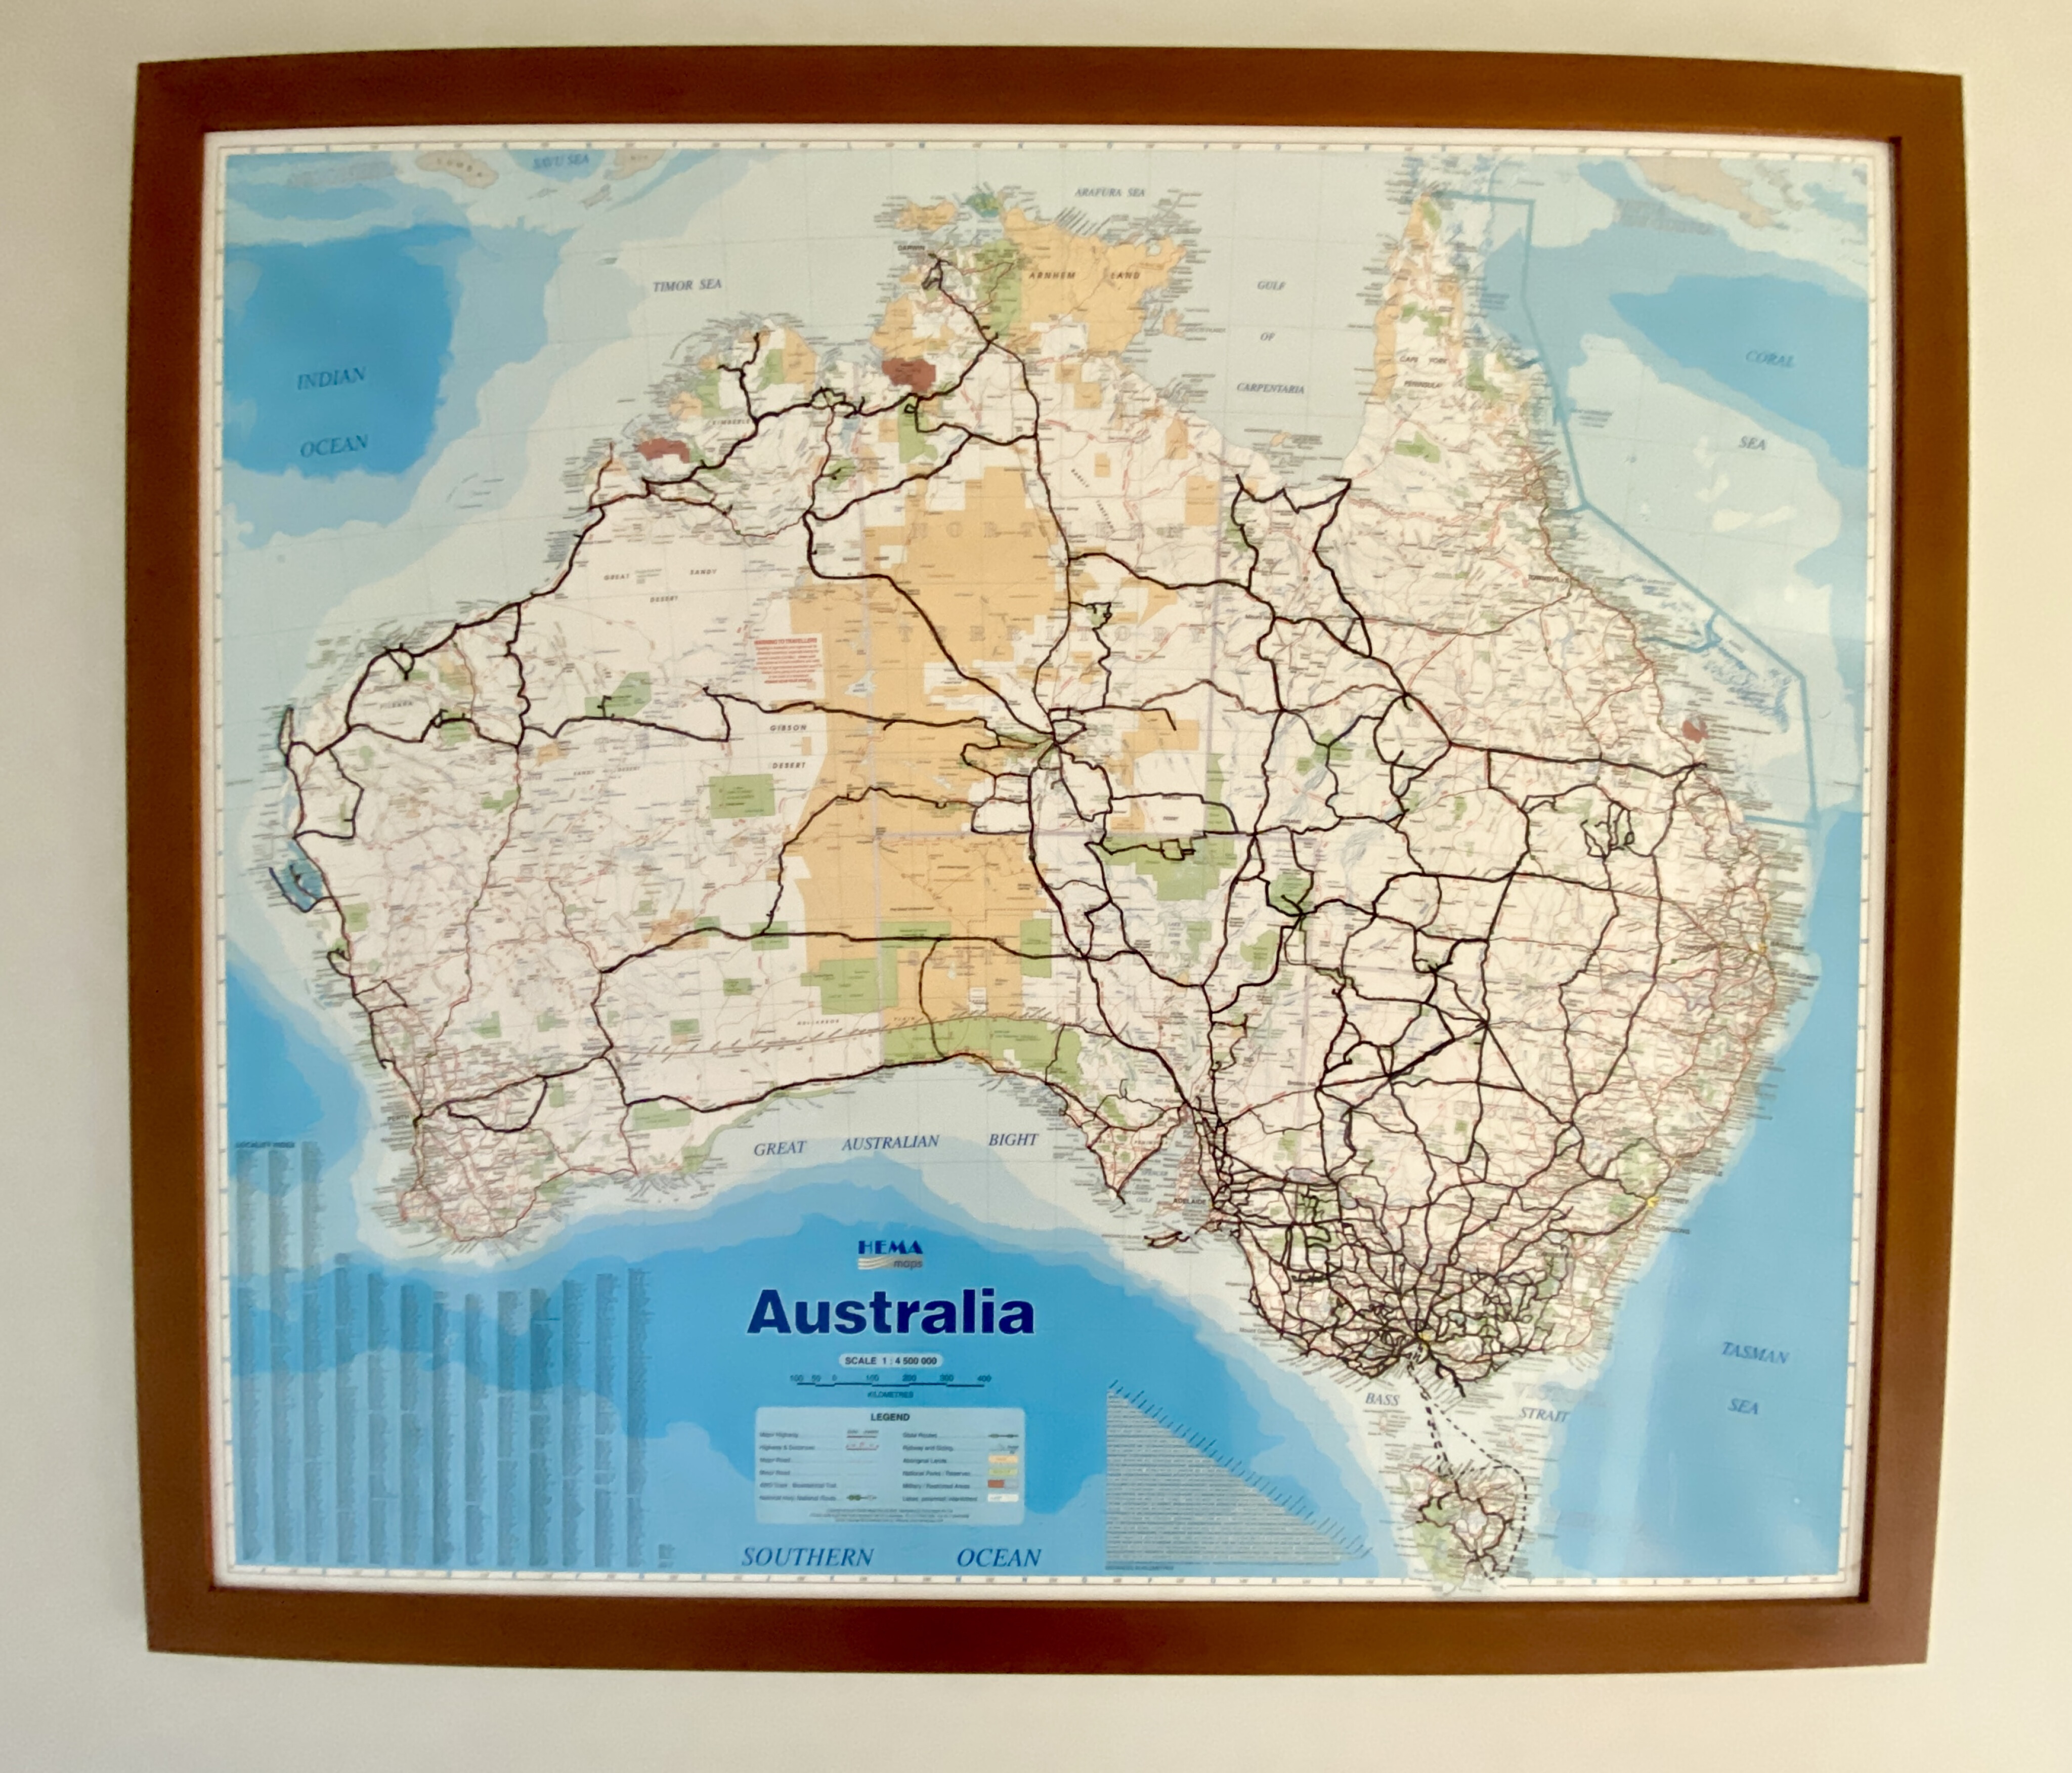 fdb92810/4x4 australia explore trip planning the hema wall map helps trip planning immensely JPG